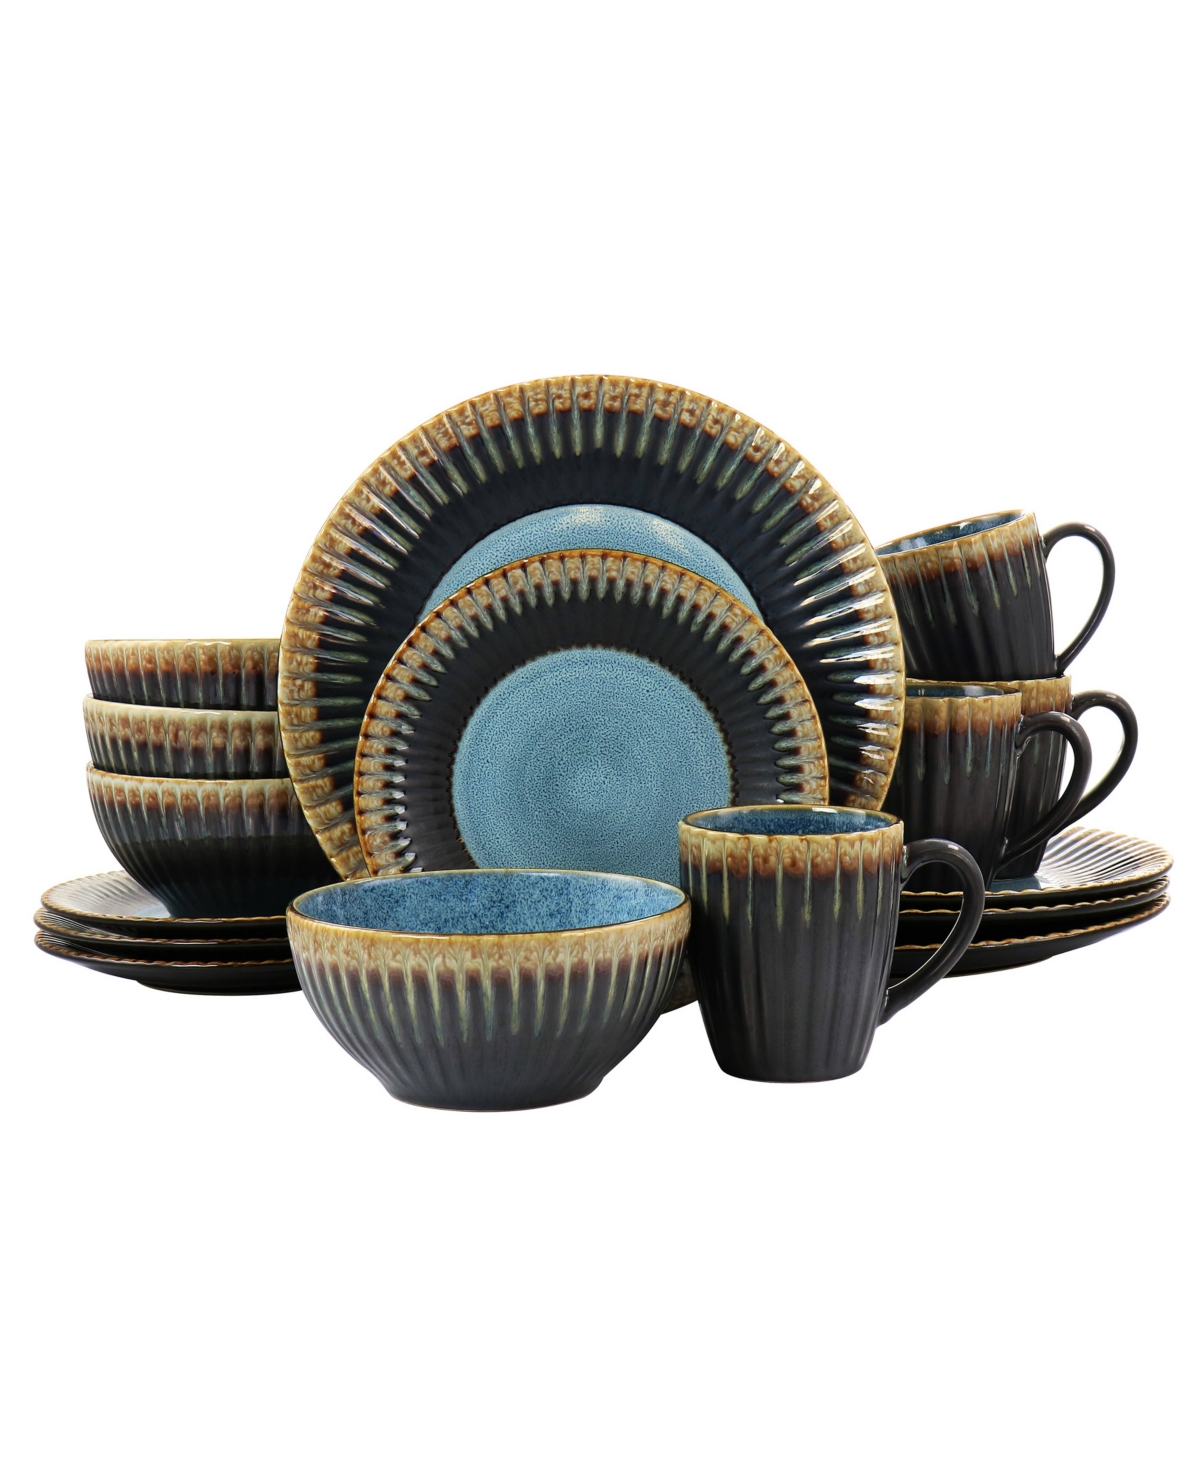 Reactive Glaze Isidora 16 Piece Round Stoneware Dinnerware Set, Service for 4 - Multi-Color